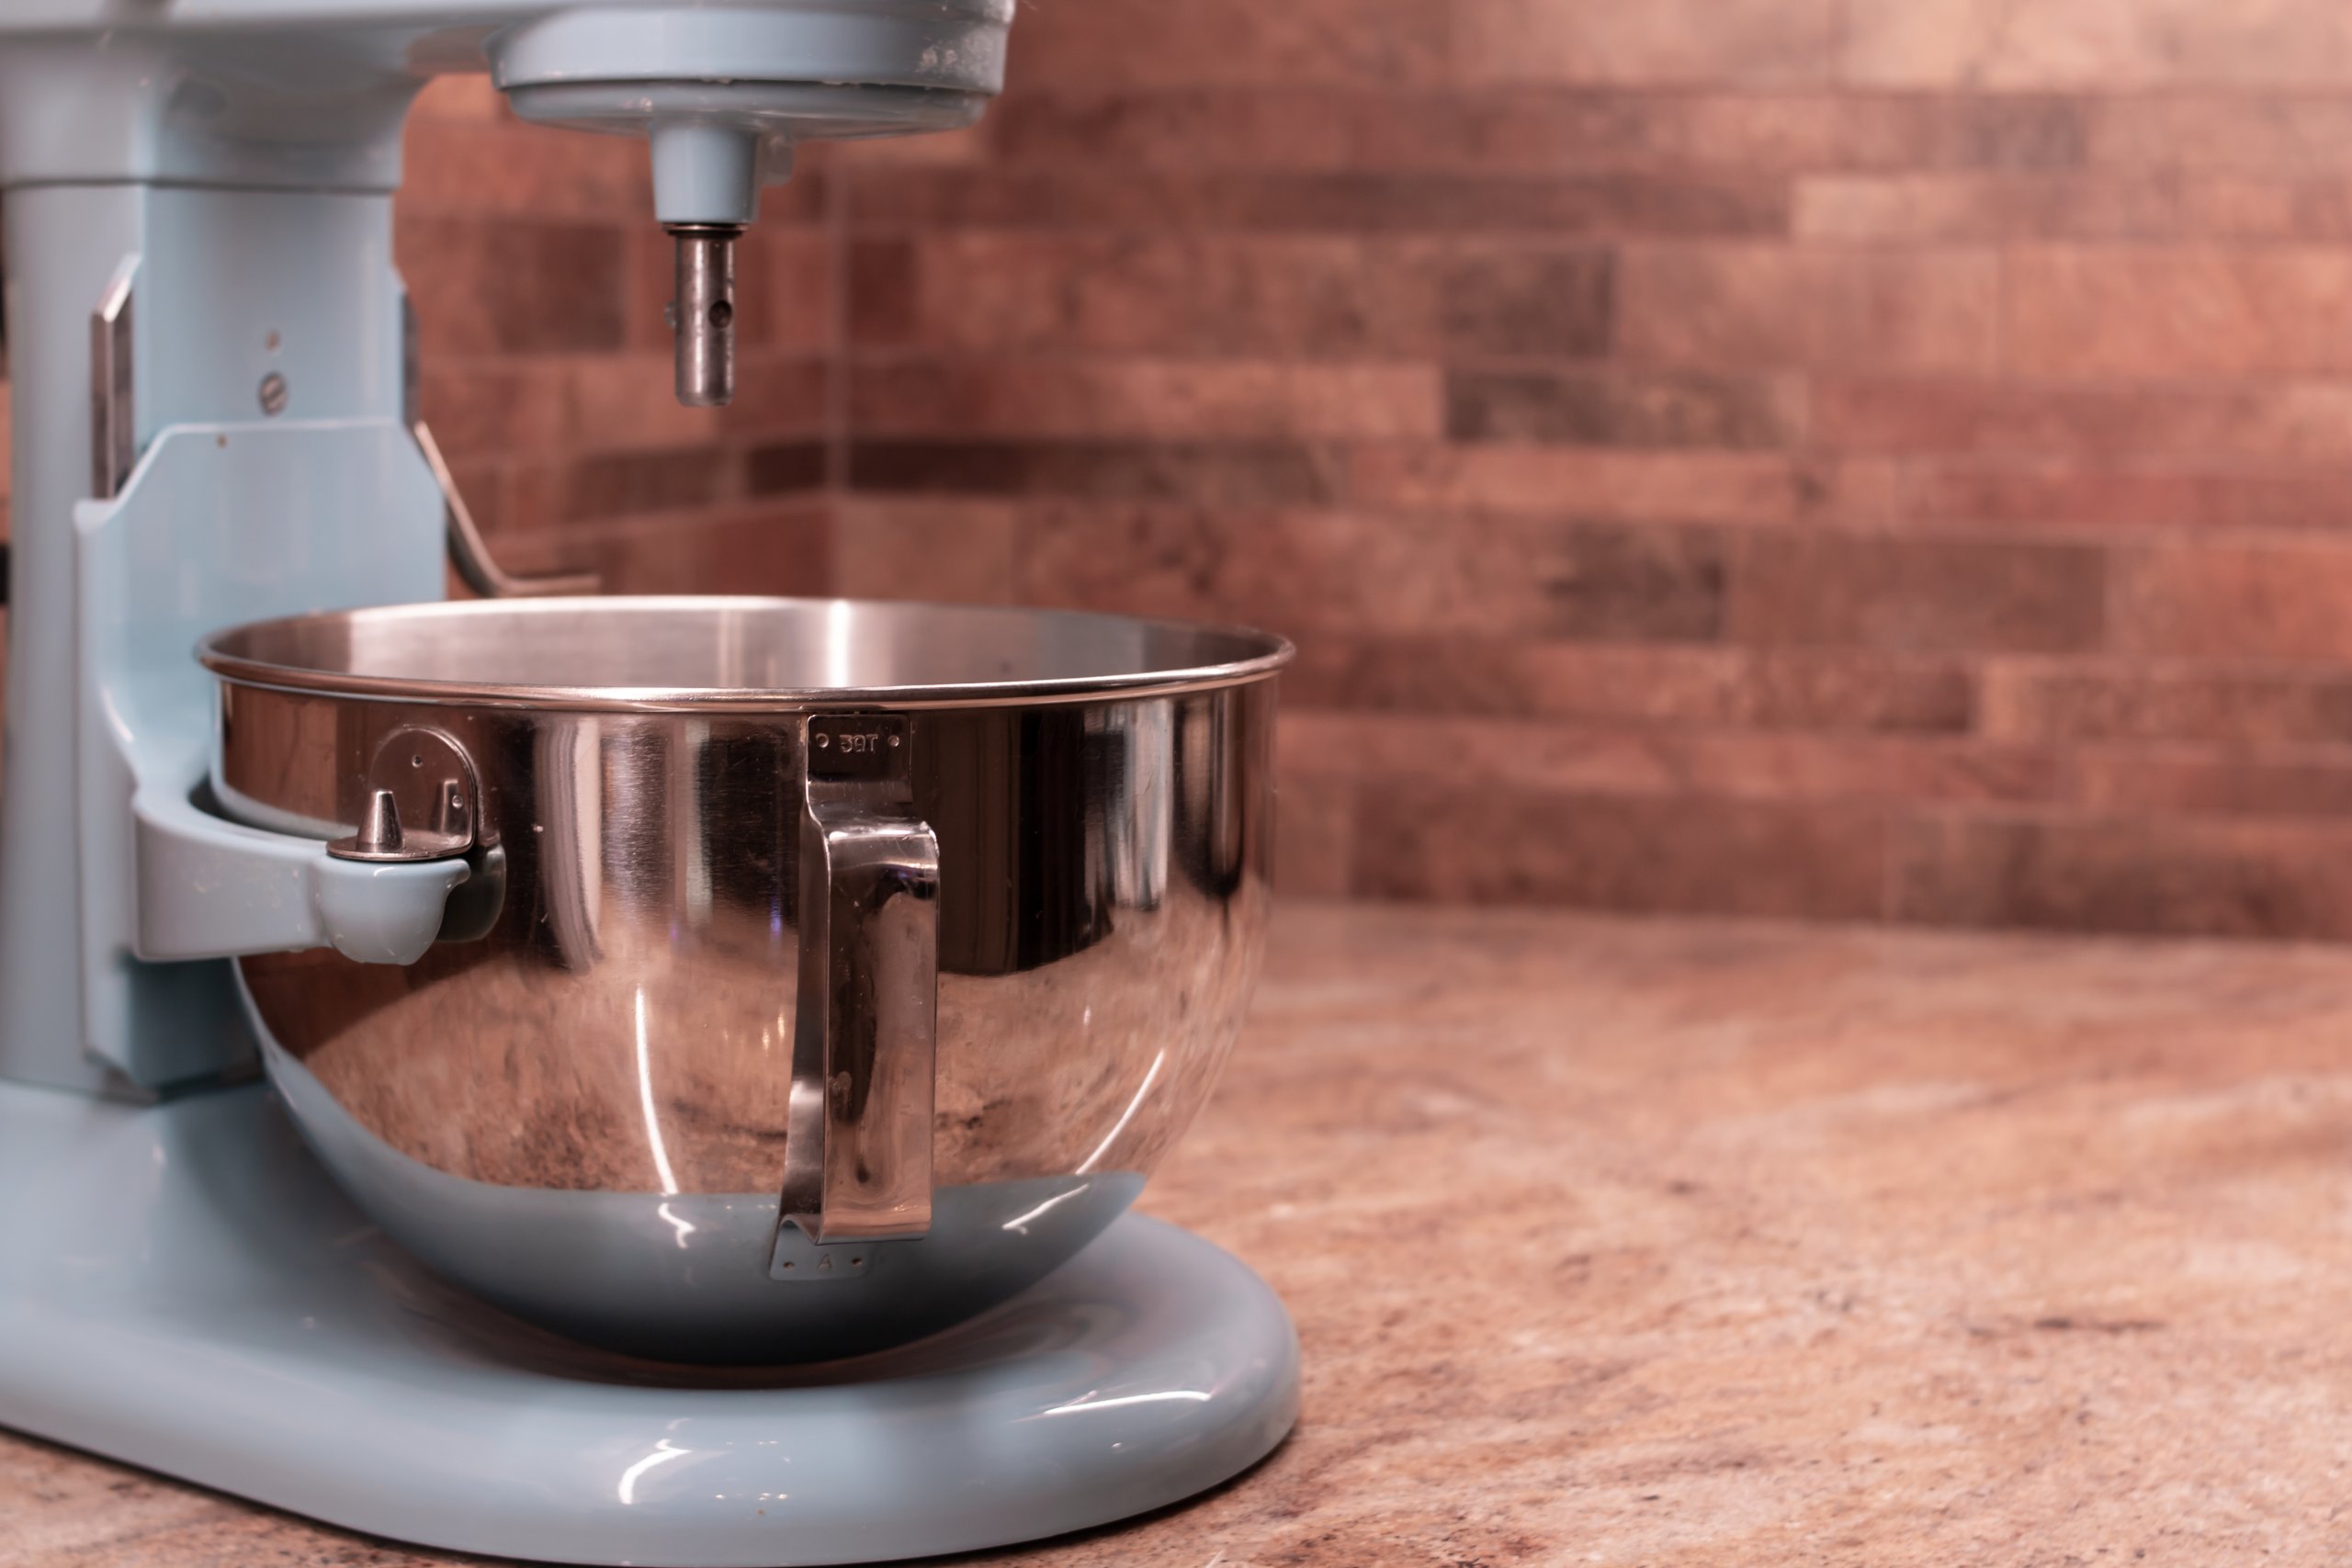 Mixing bowl and terracotta kitchen backsplash